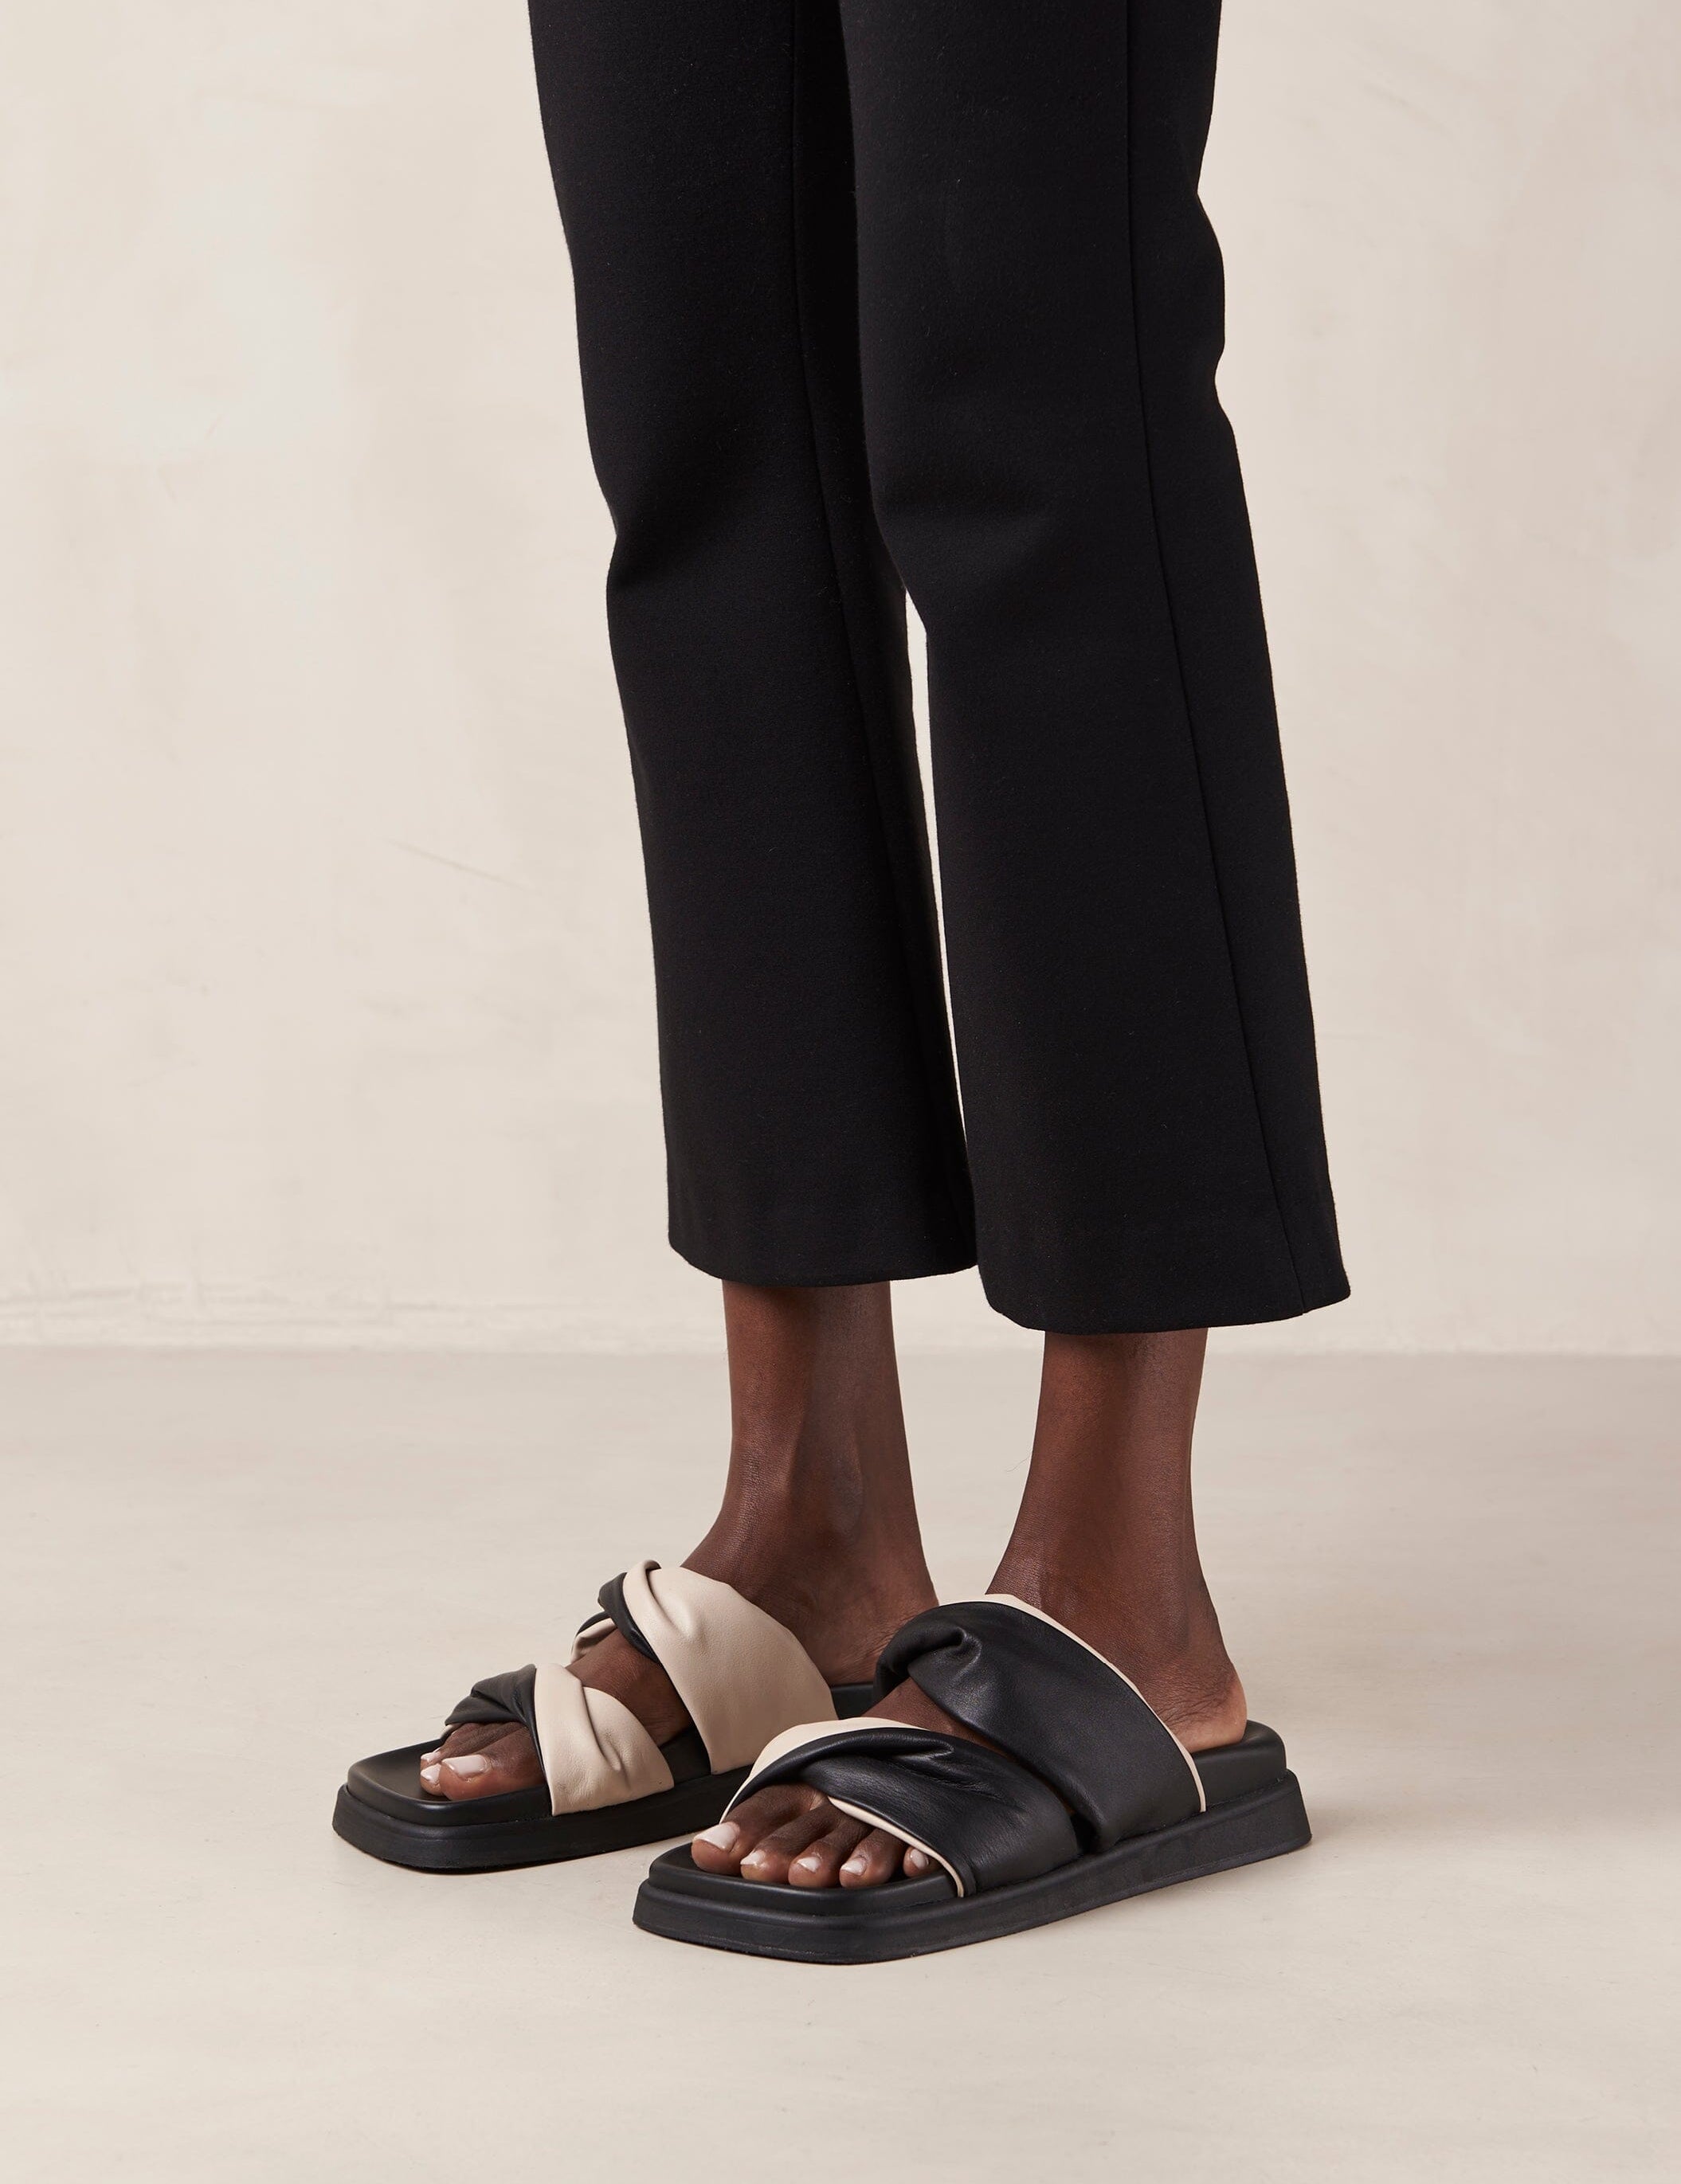 shaka-bicolor-black-cream-leather-sandals-sandals-alohas-893486_3000x_0bc13417-5d5e-4fe8-9335-6149f9197fad.jpg